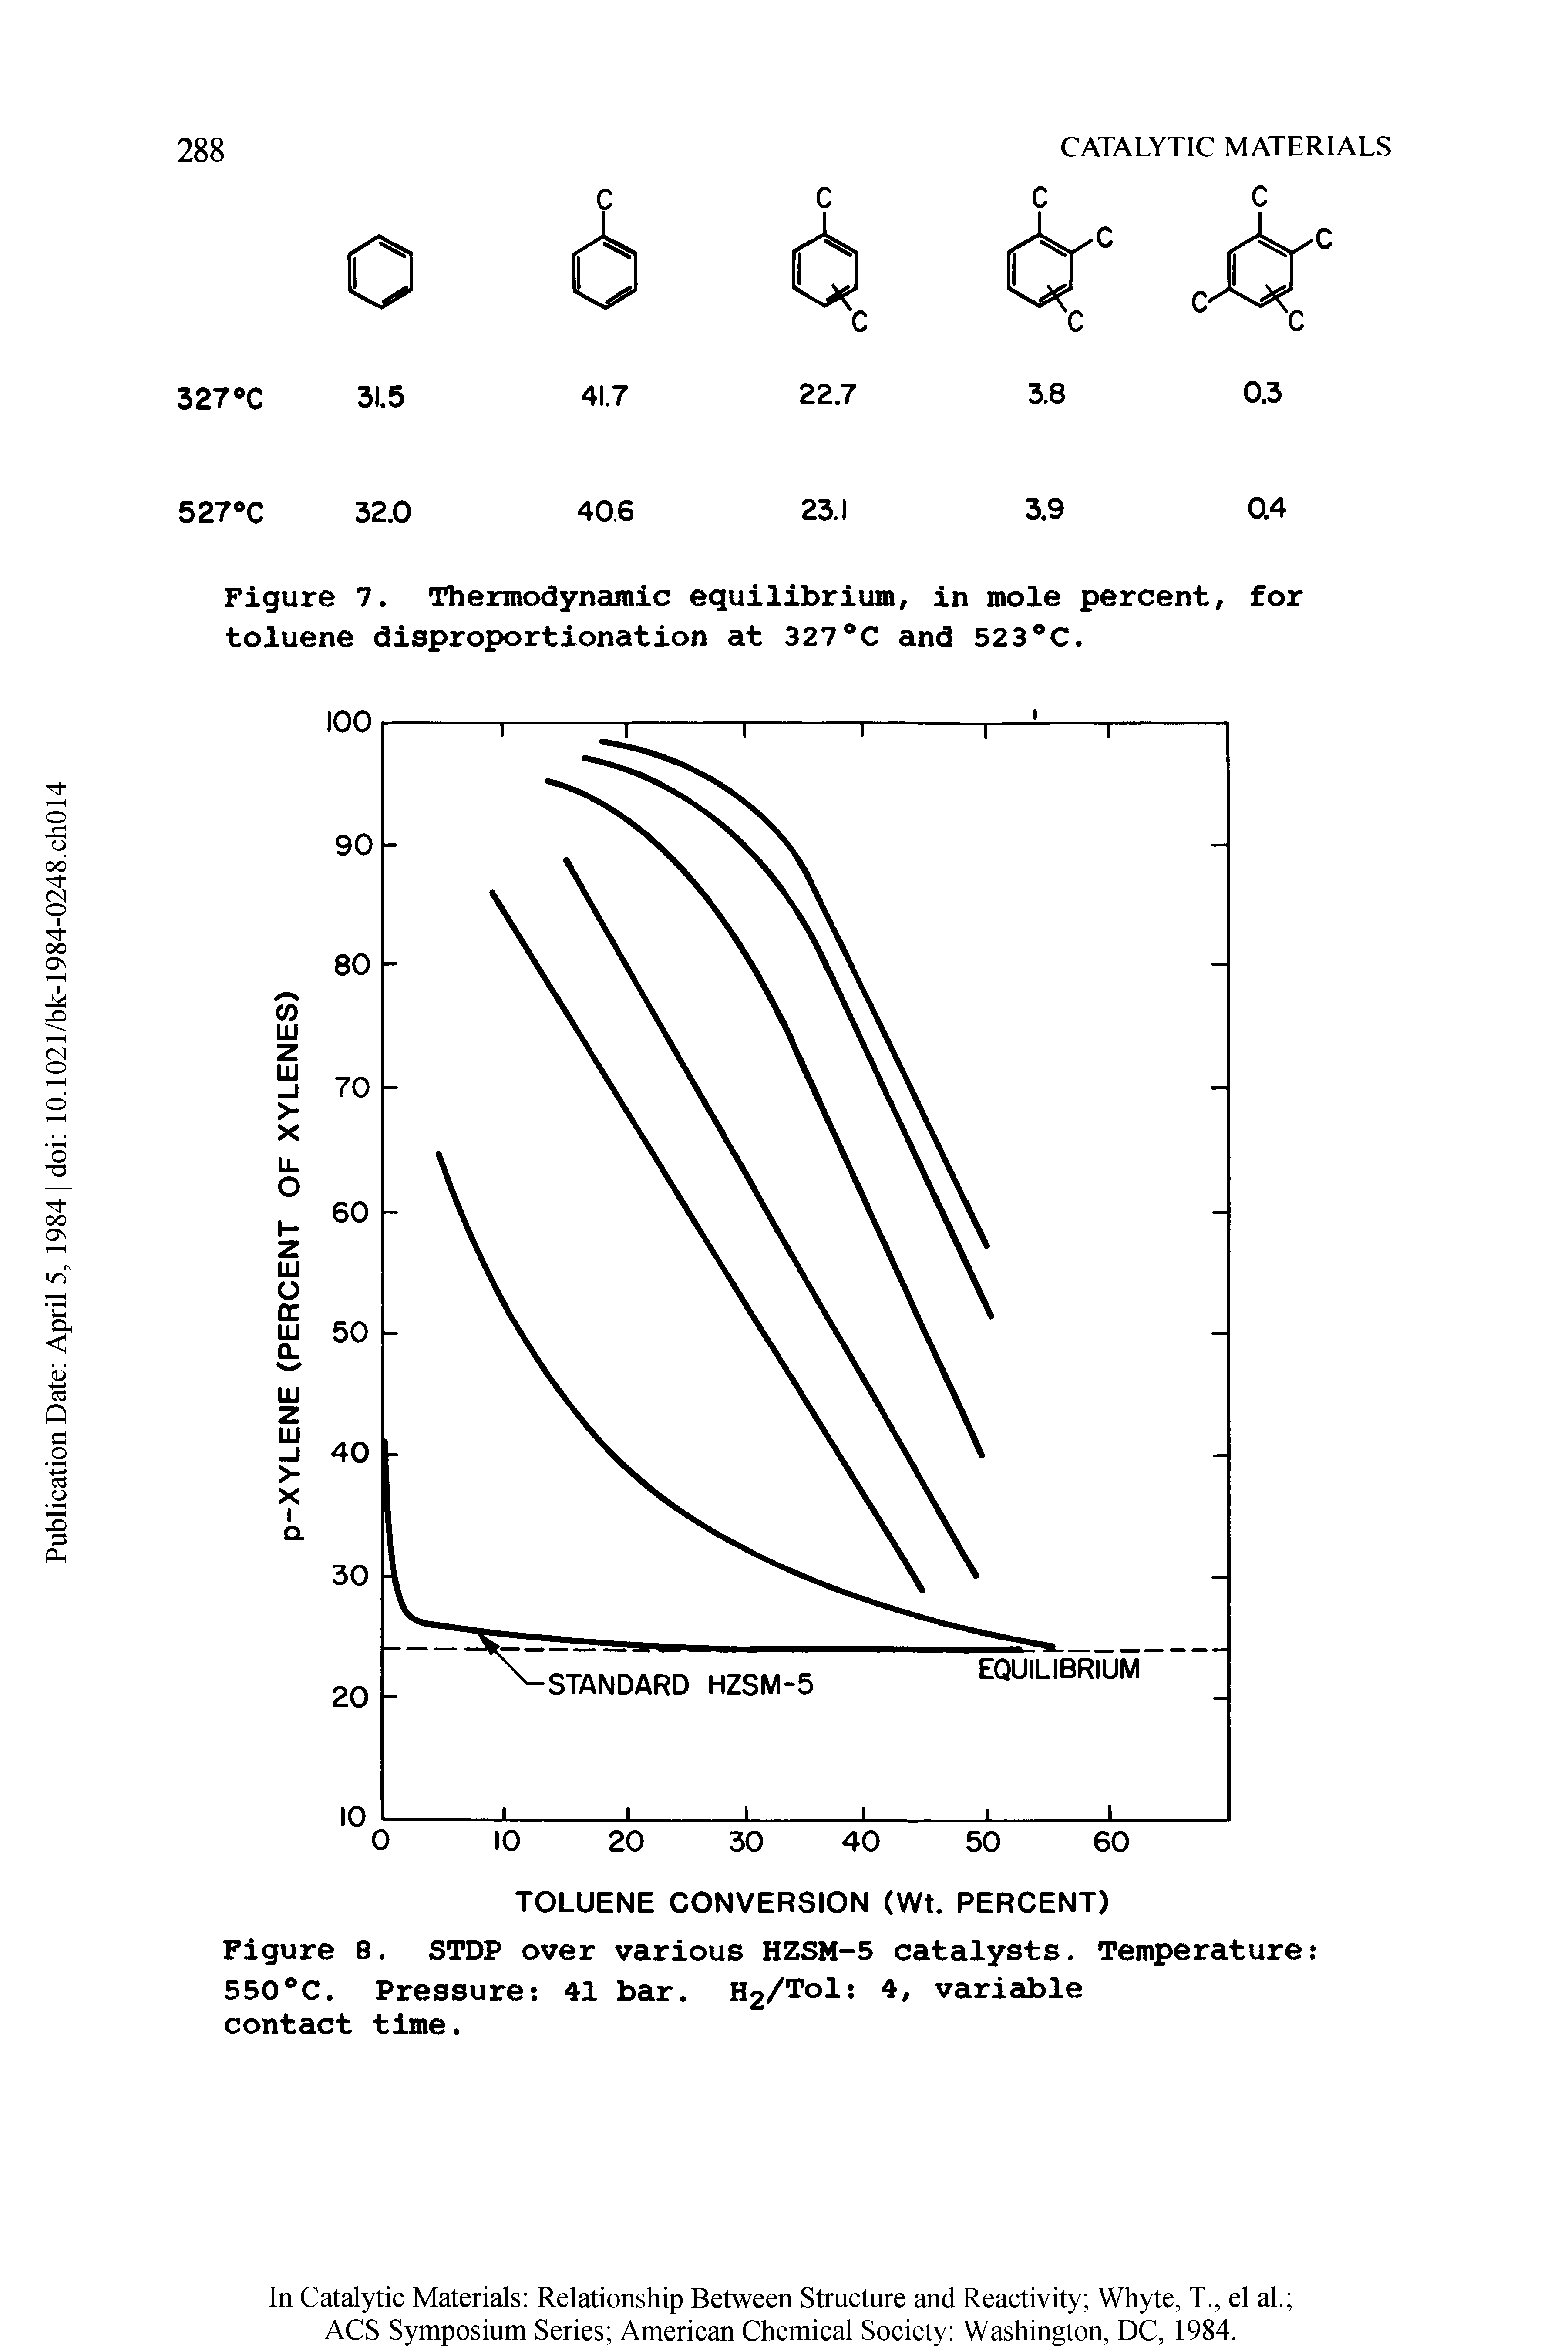 Figure 8. STDP over various HZSM-5 catalysts. Temperature 550°C. Pressure 41 bar. H2/Tol 4, variable contact time.